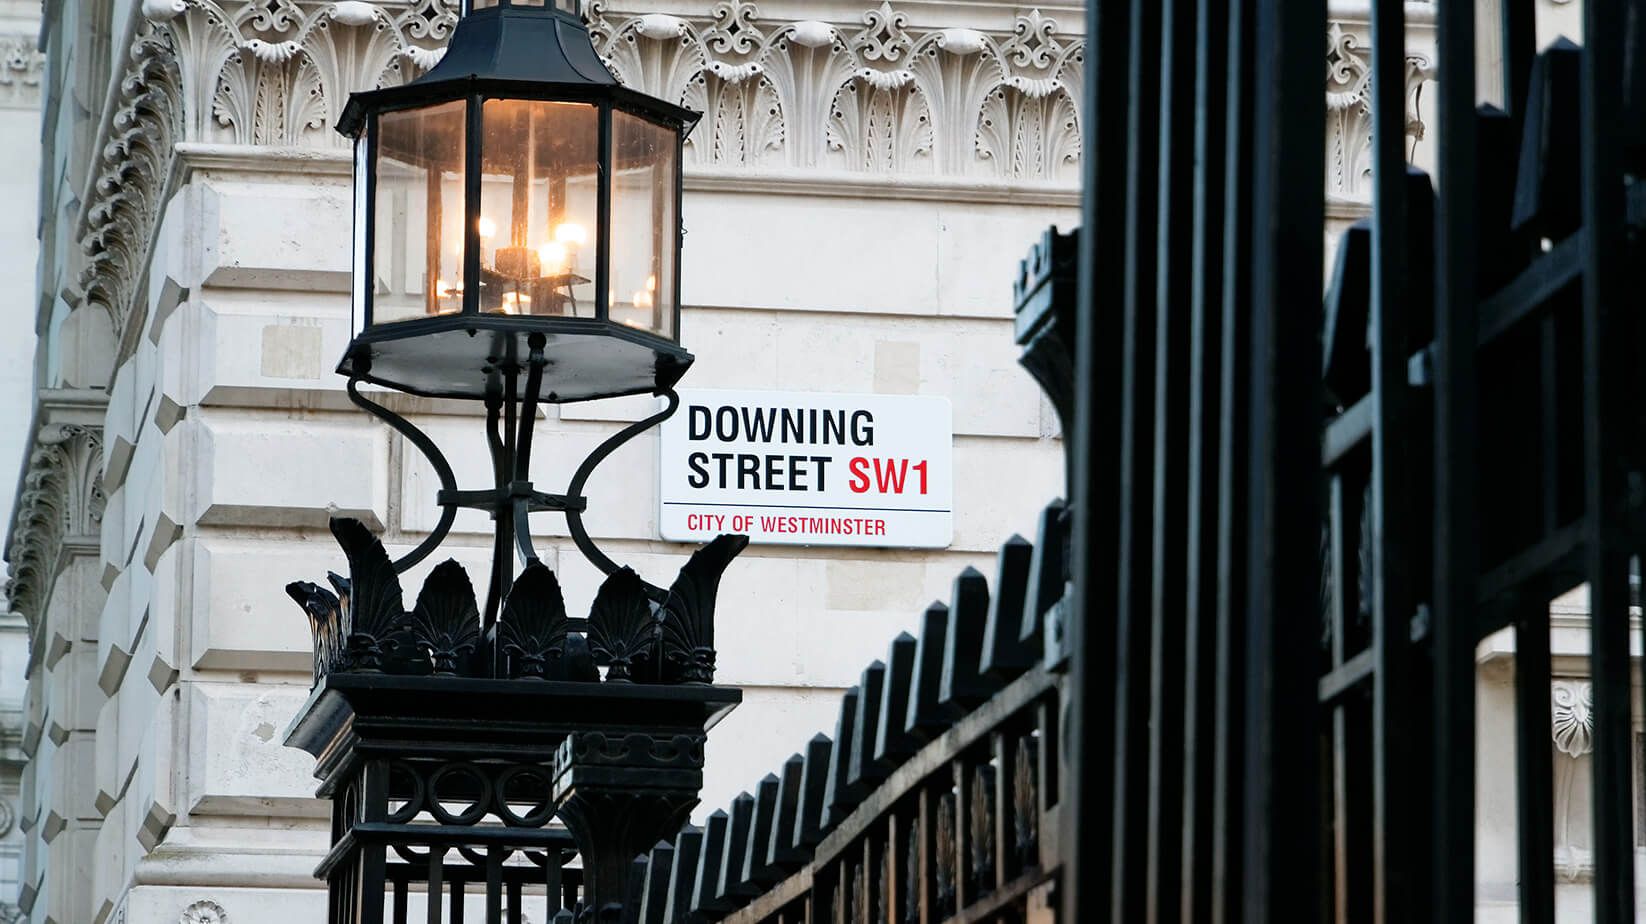 "Downing Street No.10 London", Tempat Tinggal PM Margareth Thatcher yang 2x Membalas Suratku